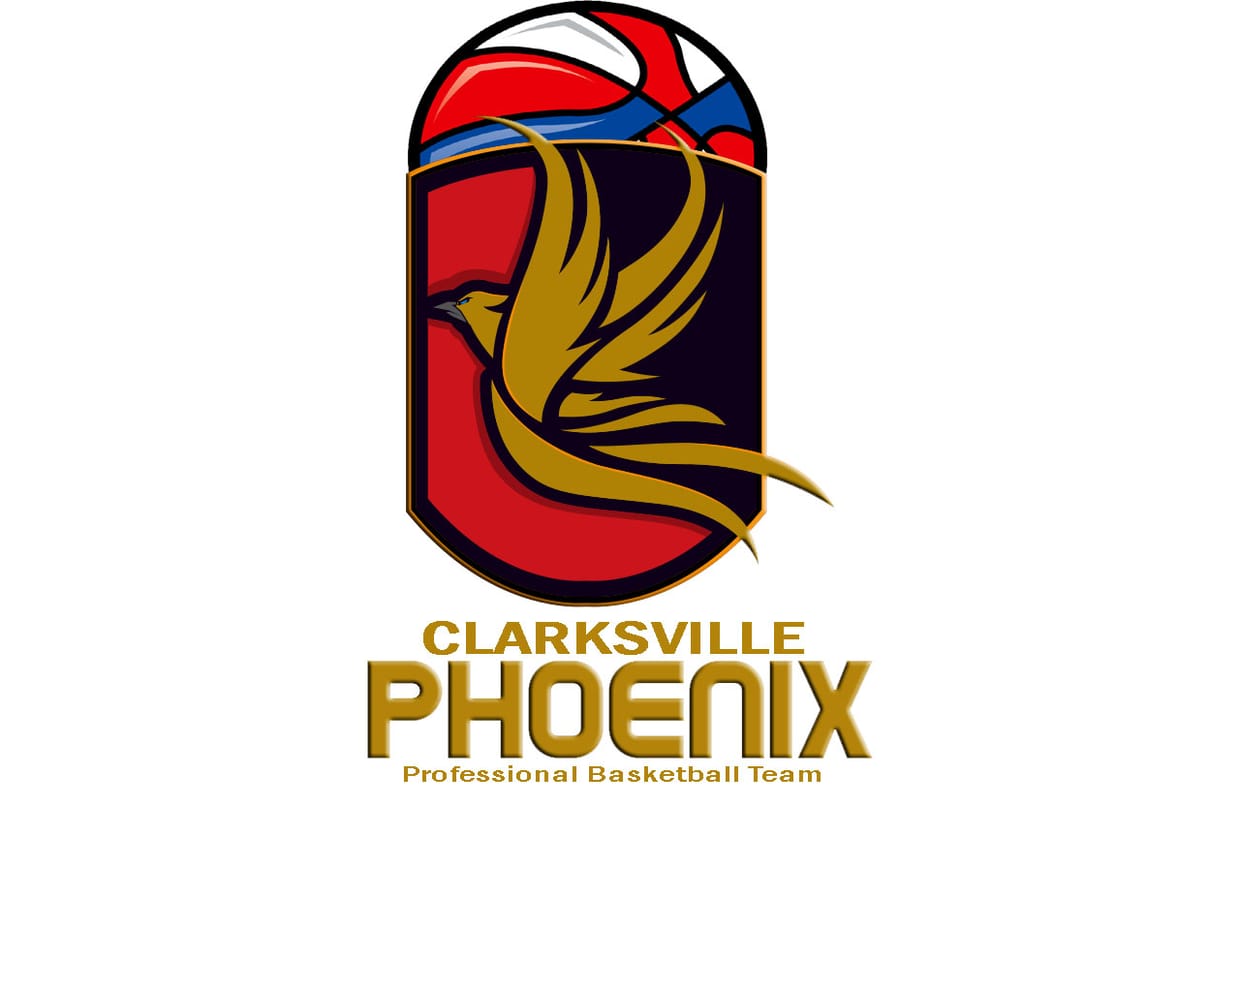 Louisville Colonels vs Clarksville Phoenix 